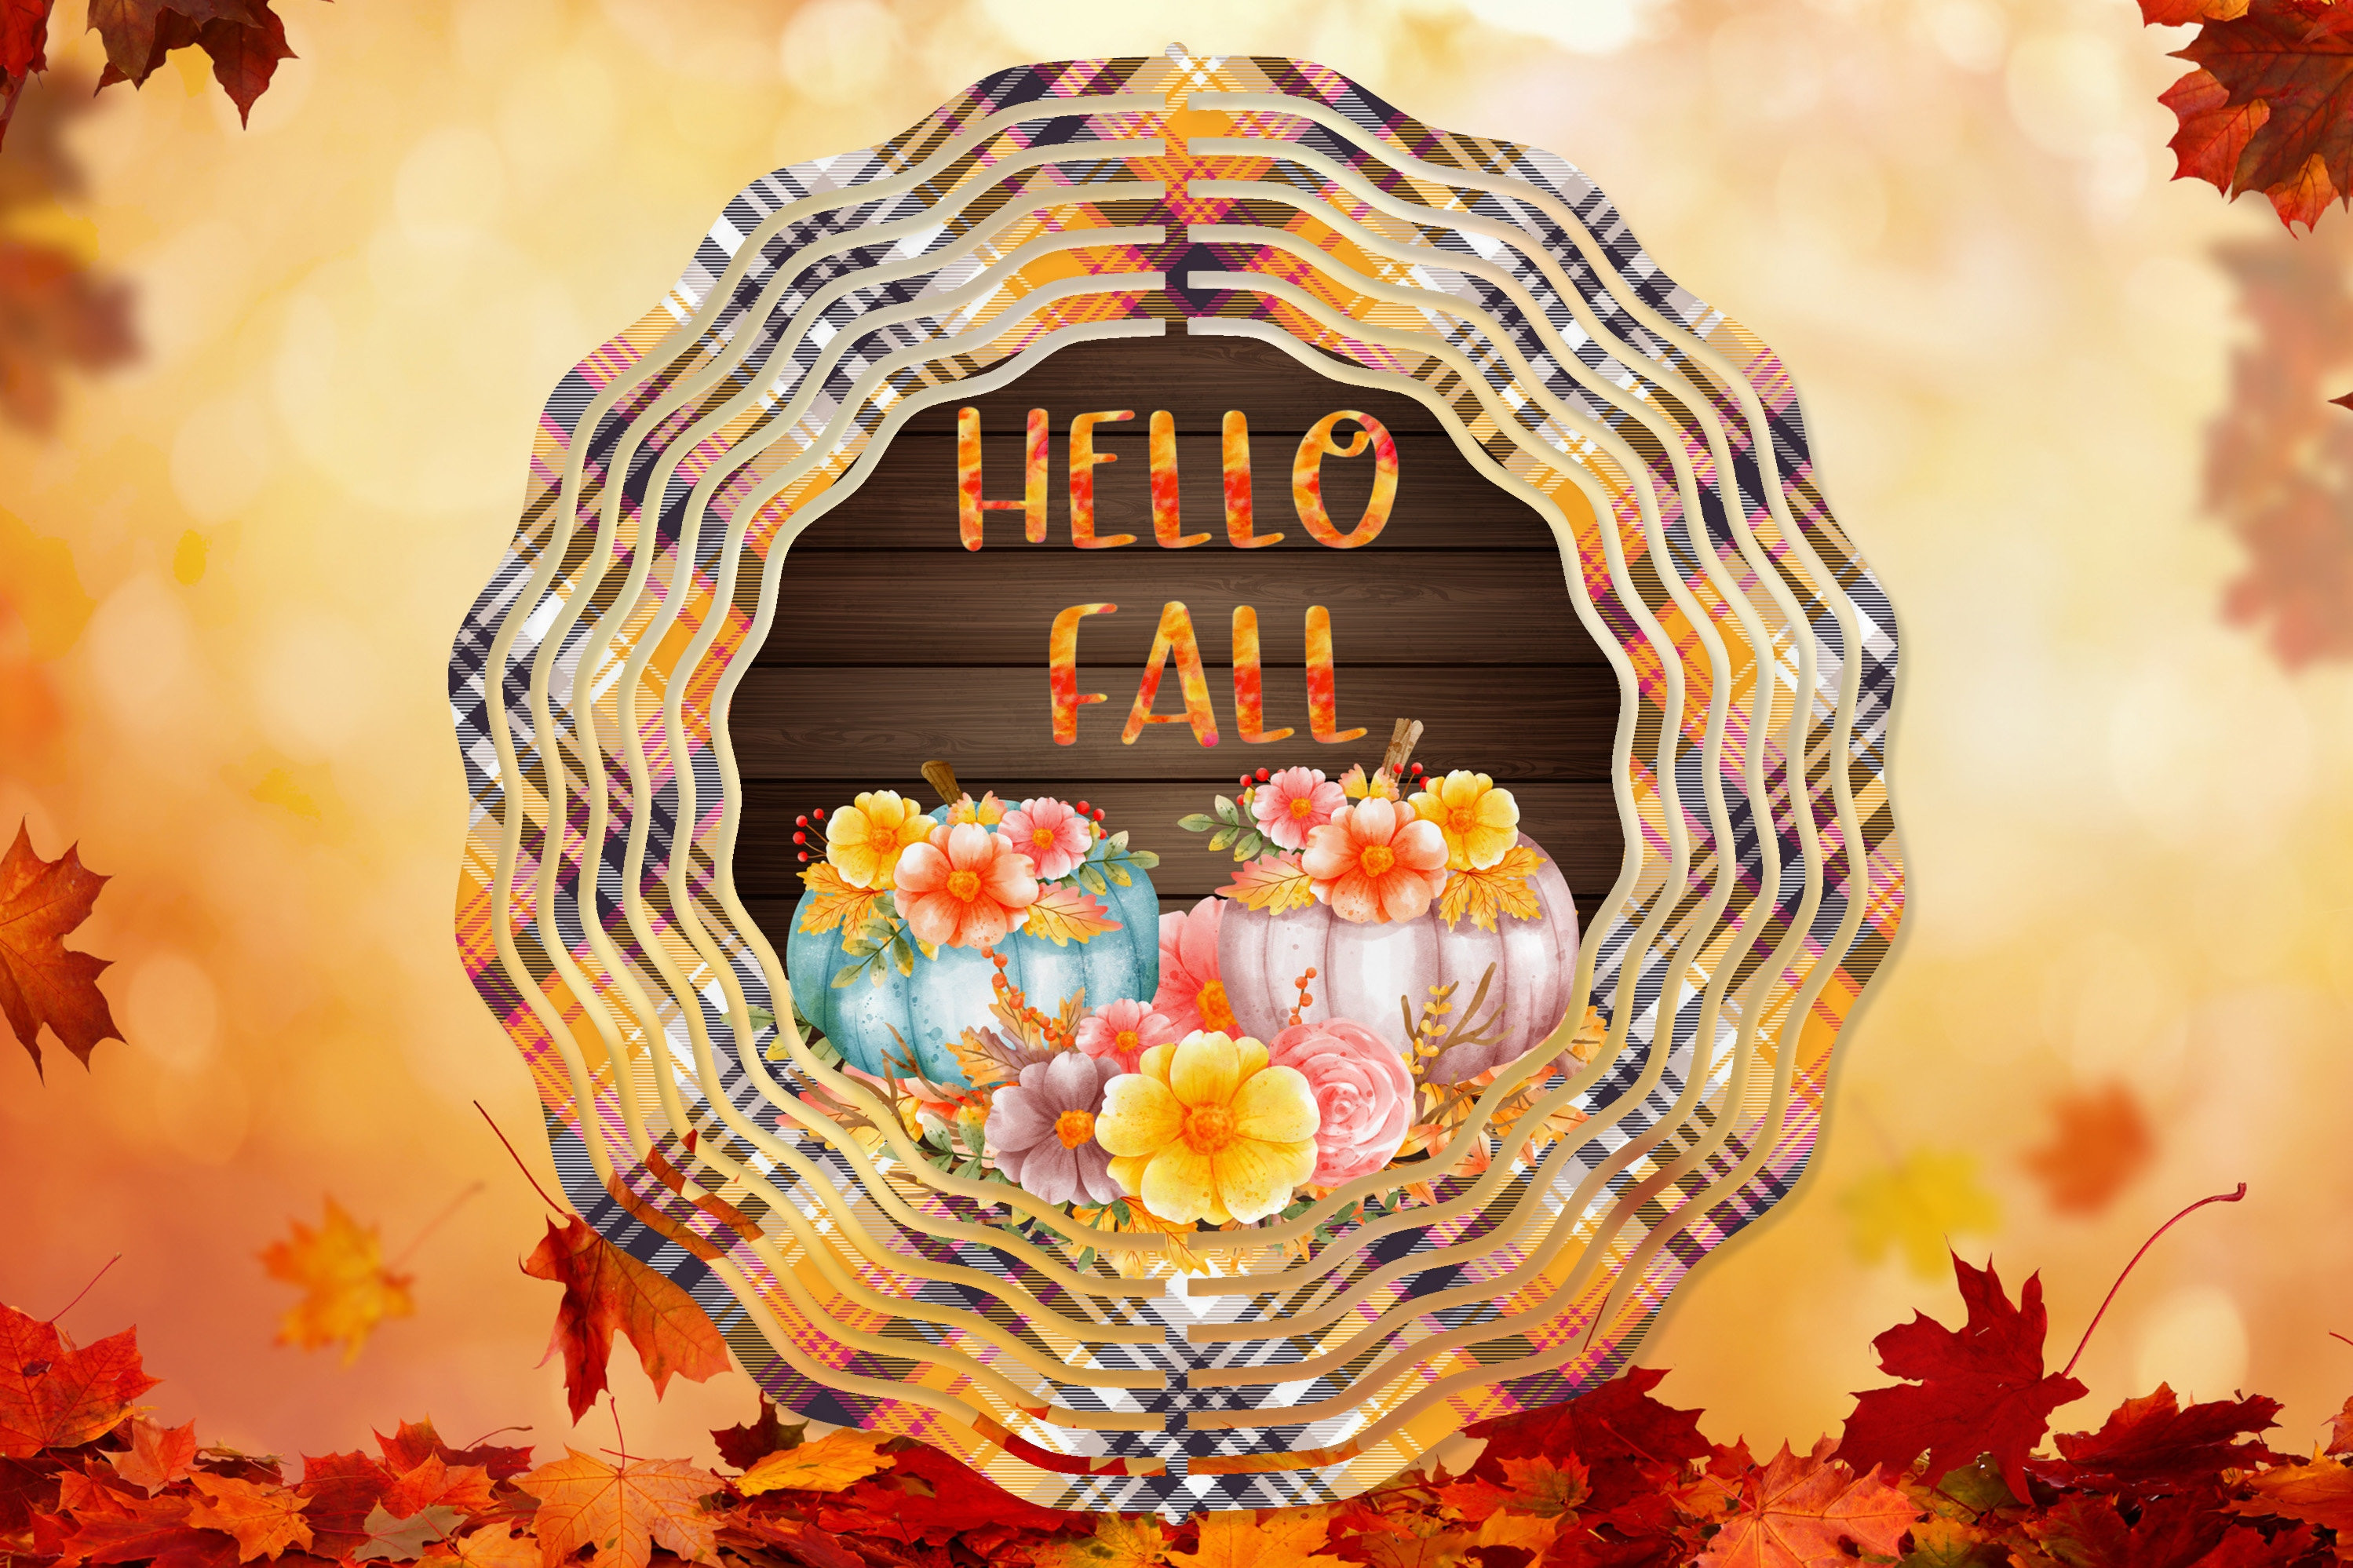 Hello Fall Pumpkins Wind Spinner For Yard And Garden, Outdoor Garden Yard Decoration, Garden Decor, Chime Art Gift